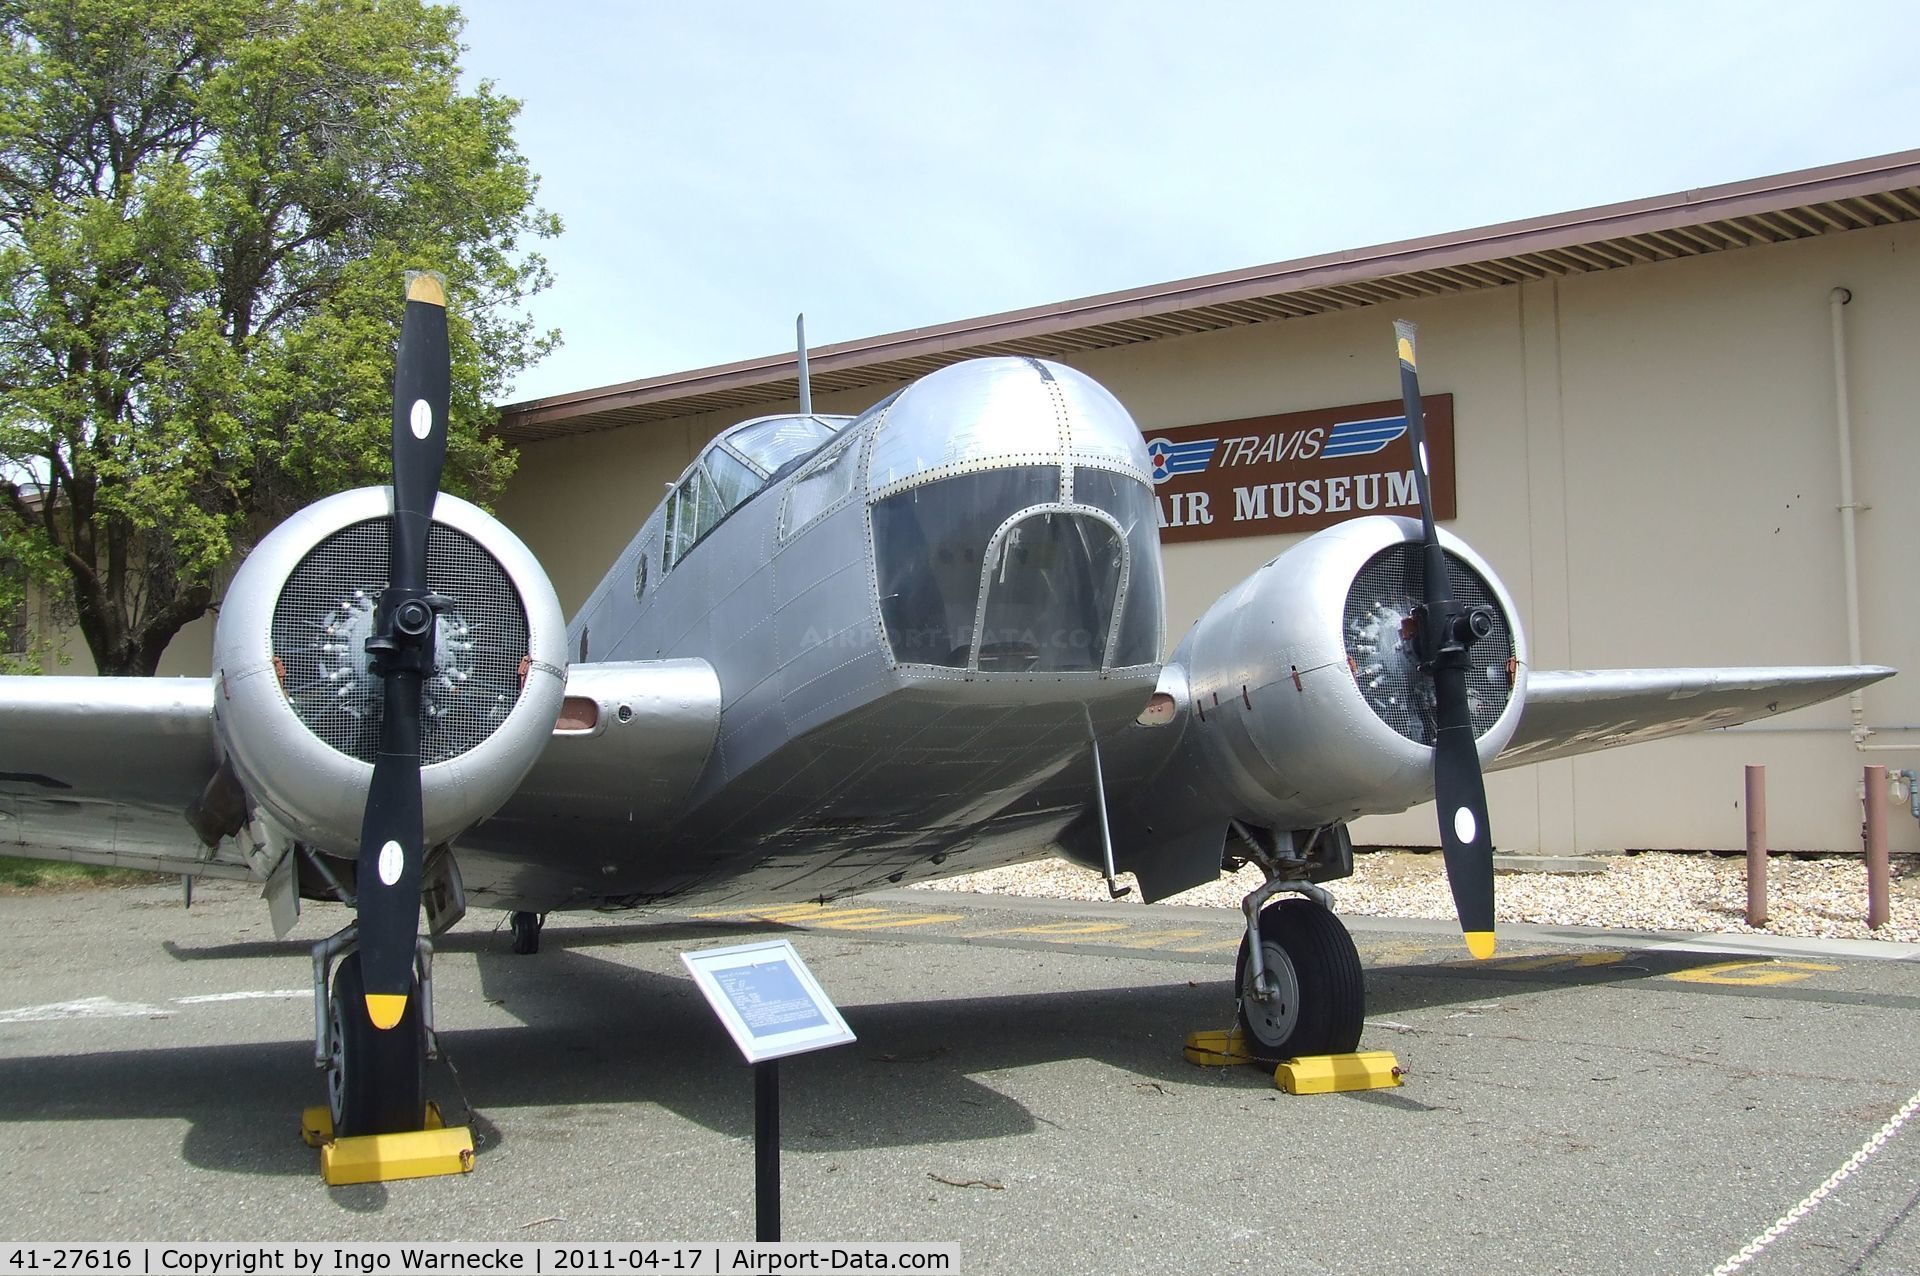 41-27616, 1942 Beech AT-11 Kansan C/N 1461, Beechcraft AT-11 Kansan at the Travis Air Museum, Travis AFB Fairfield CA